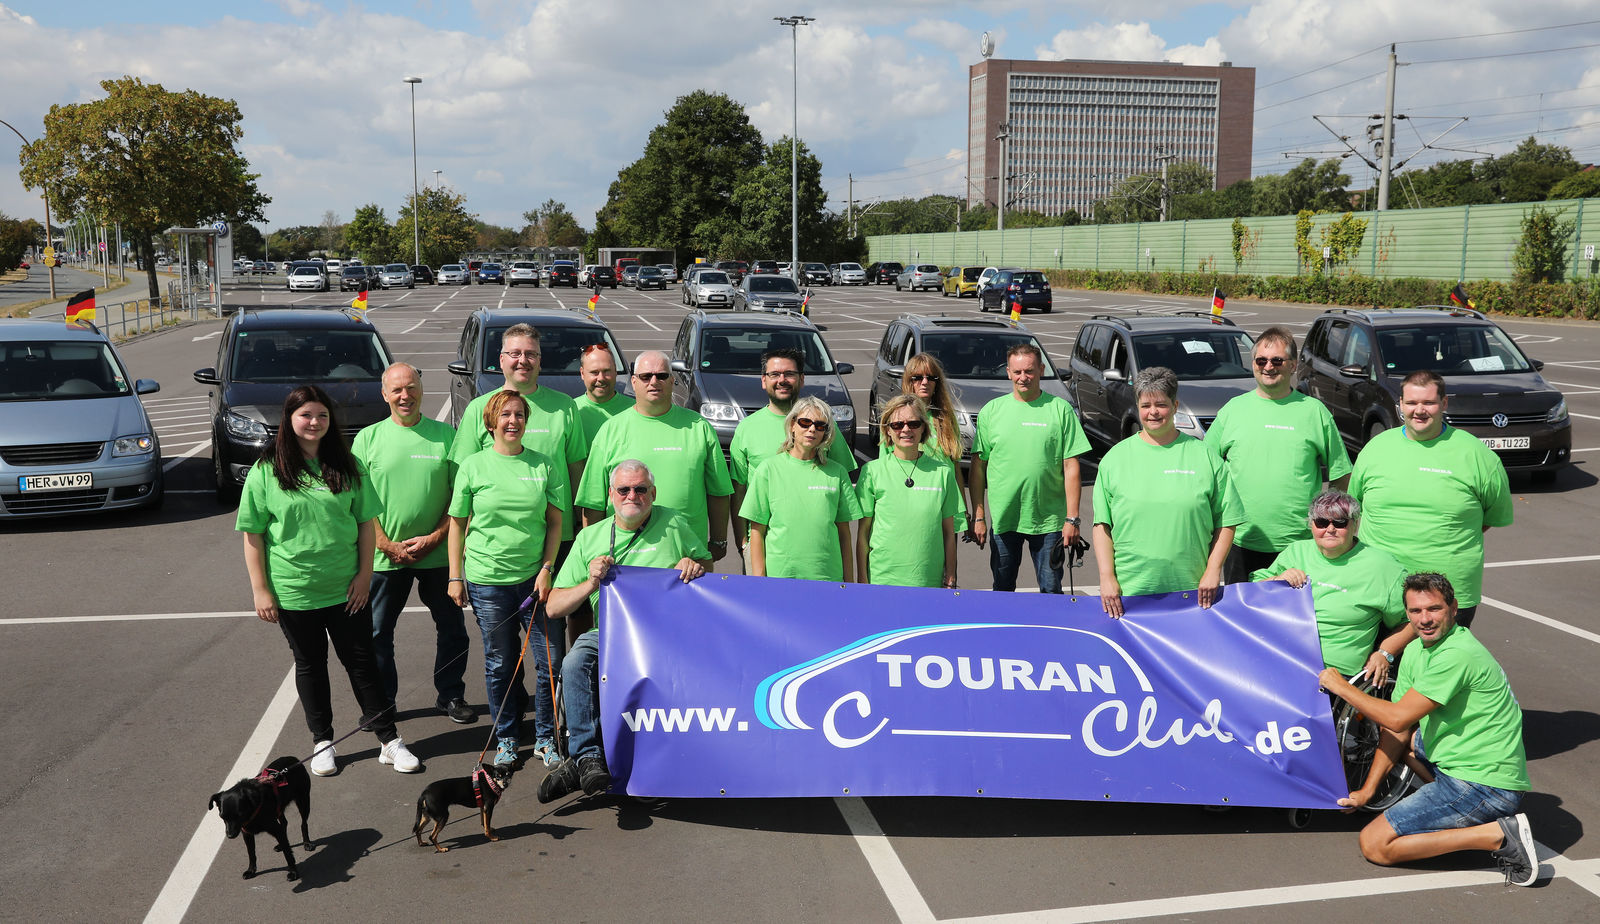 Fifteen years of loyalty - The Touran Club visits Wolfsburg